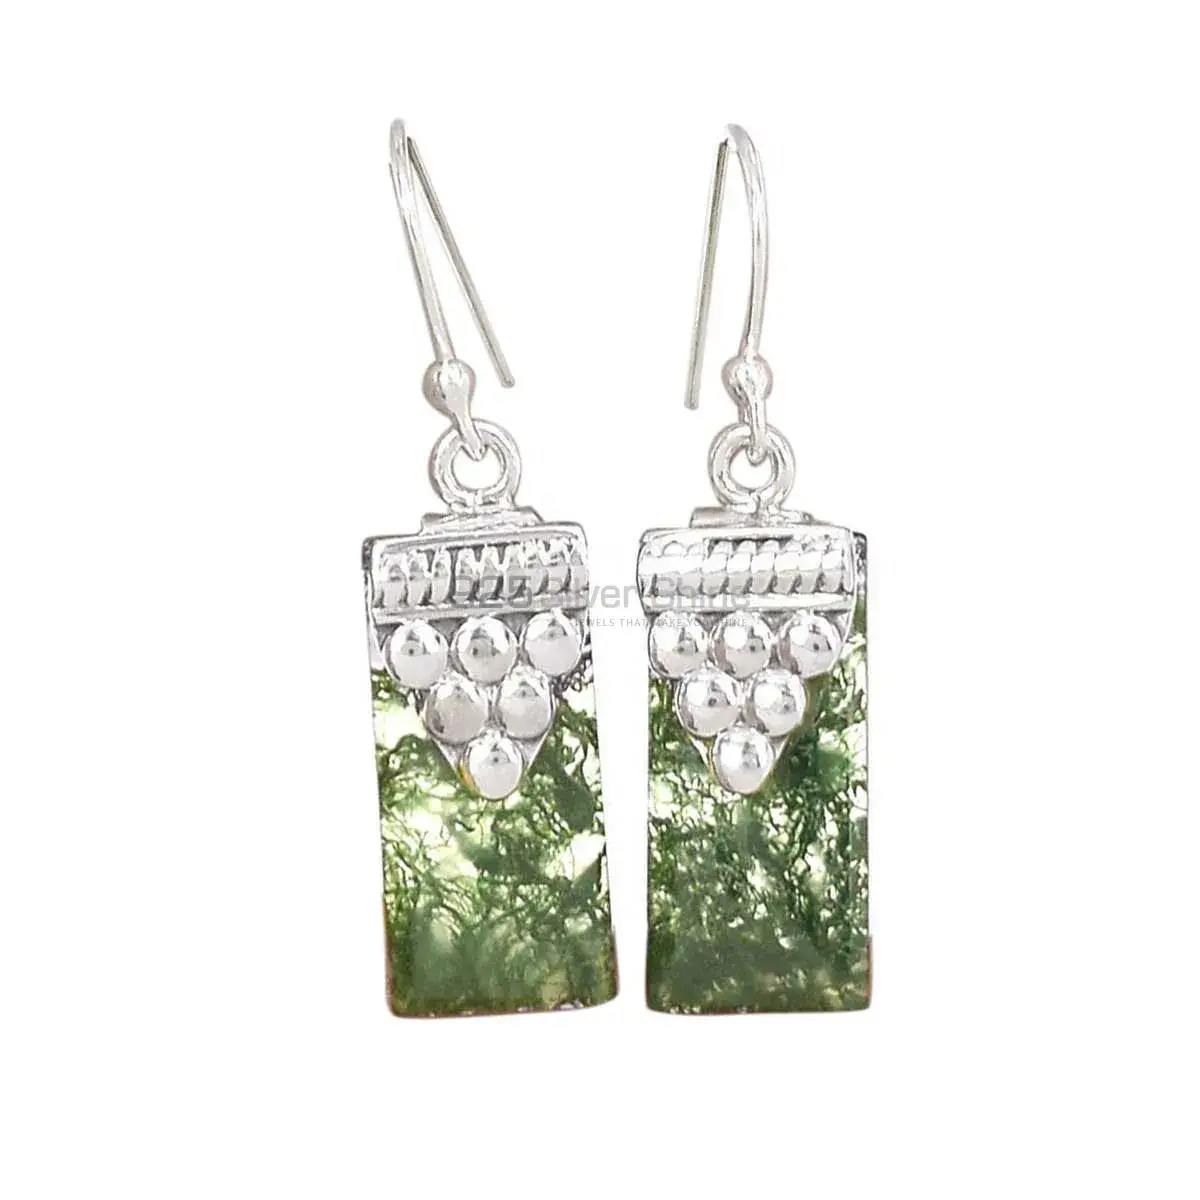 Affordable 925 Sterling Silver Earrings In Moos Agate Gemstone Jewelry 925SE2466